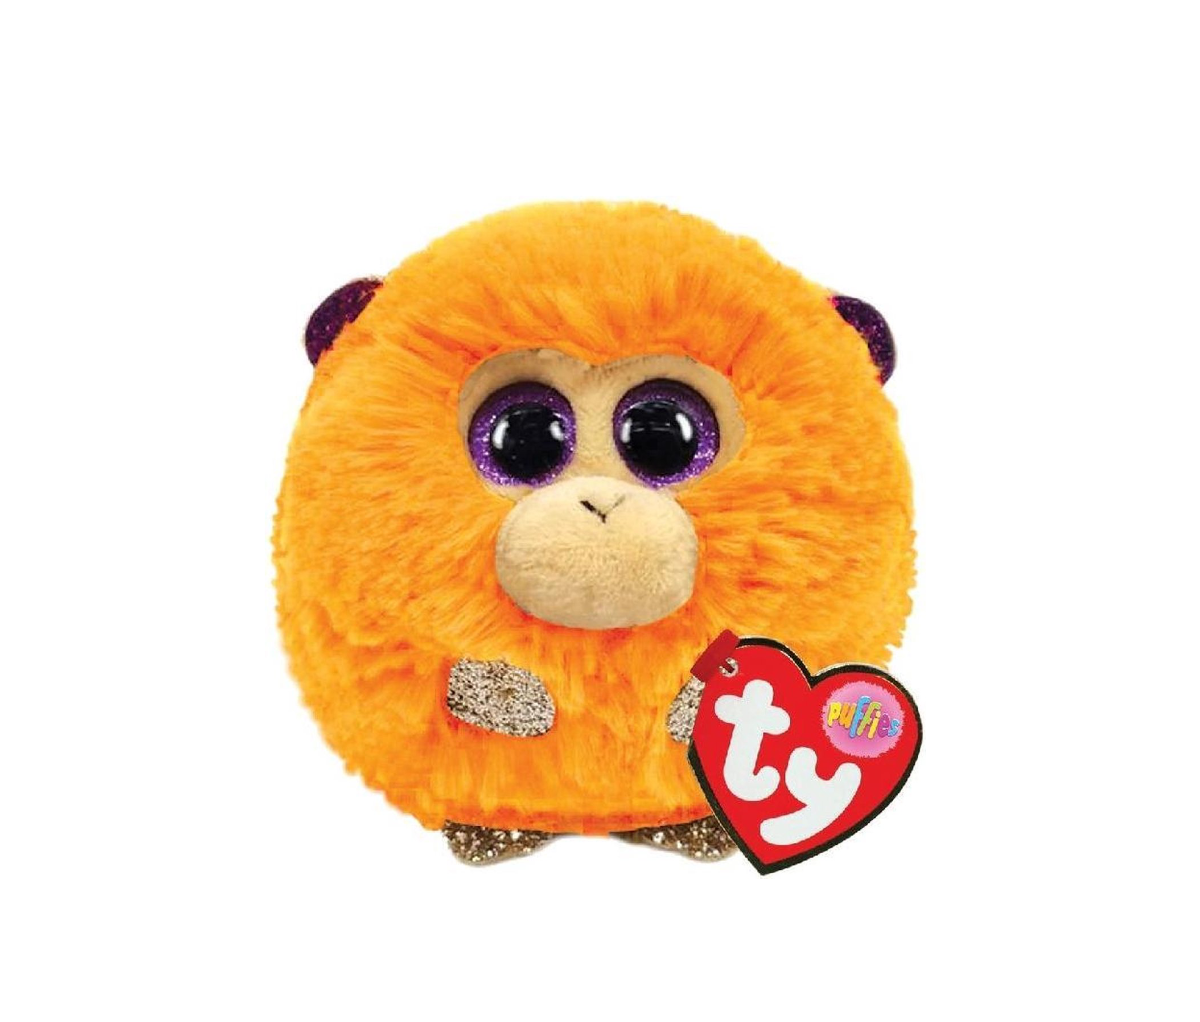 Ty Teeny Puffies Coconut Monkey 10cm